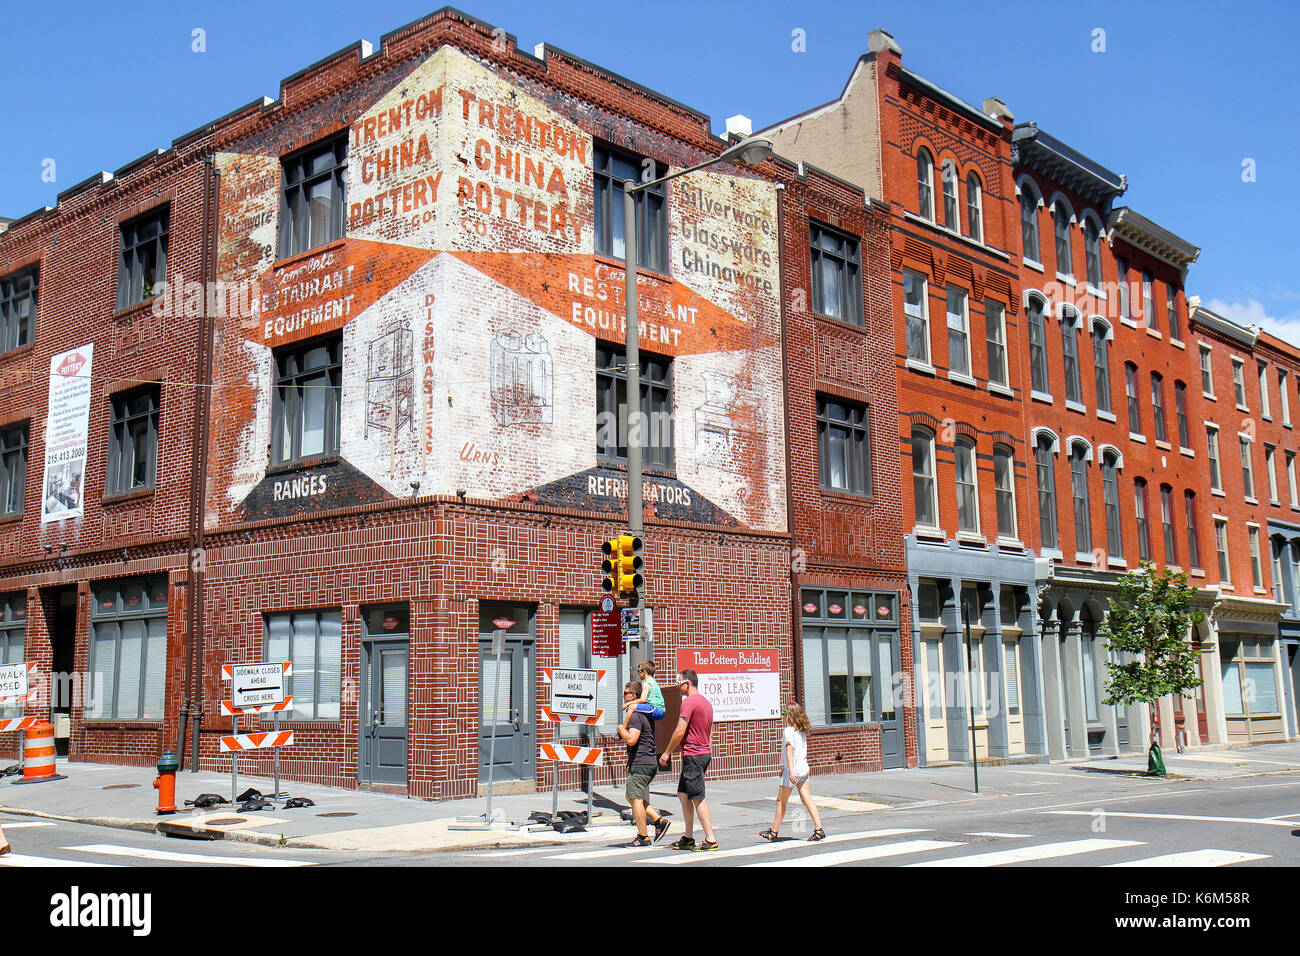 The Pottery Building, Old City, Philadelphia, Pennsylvania, United States, North America Stock Photo